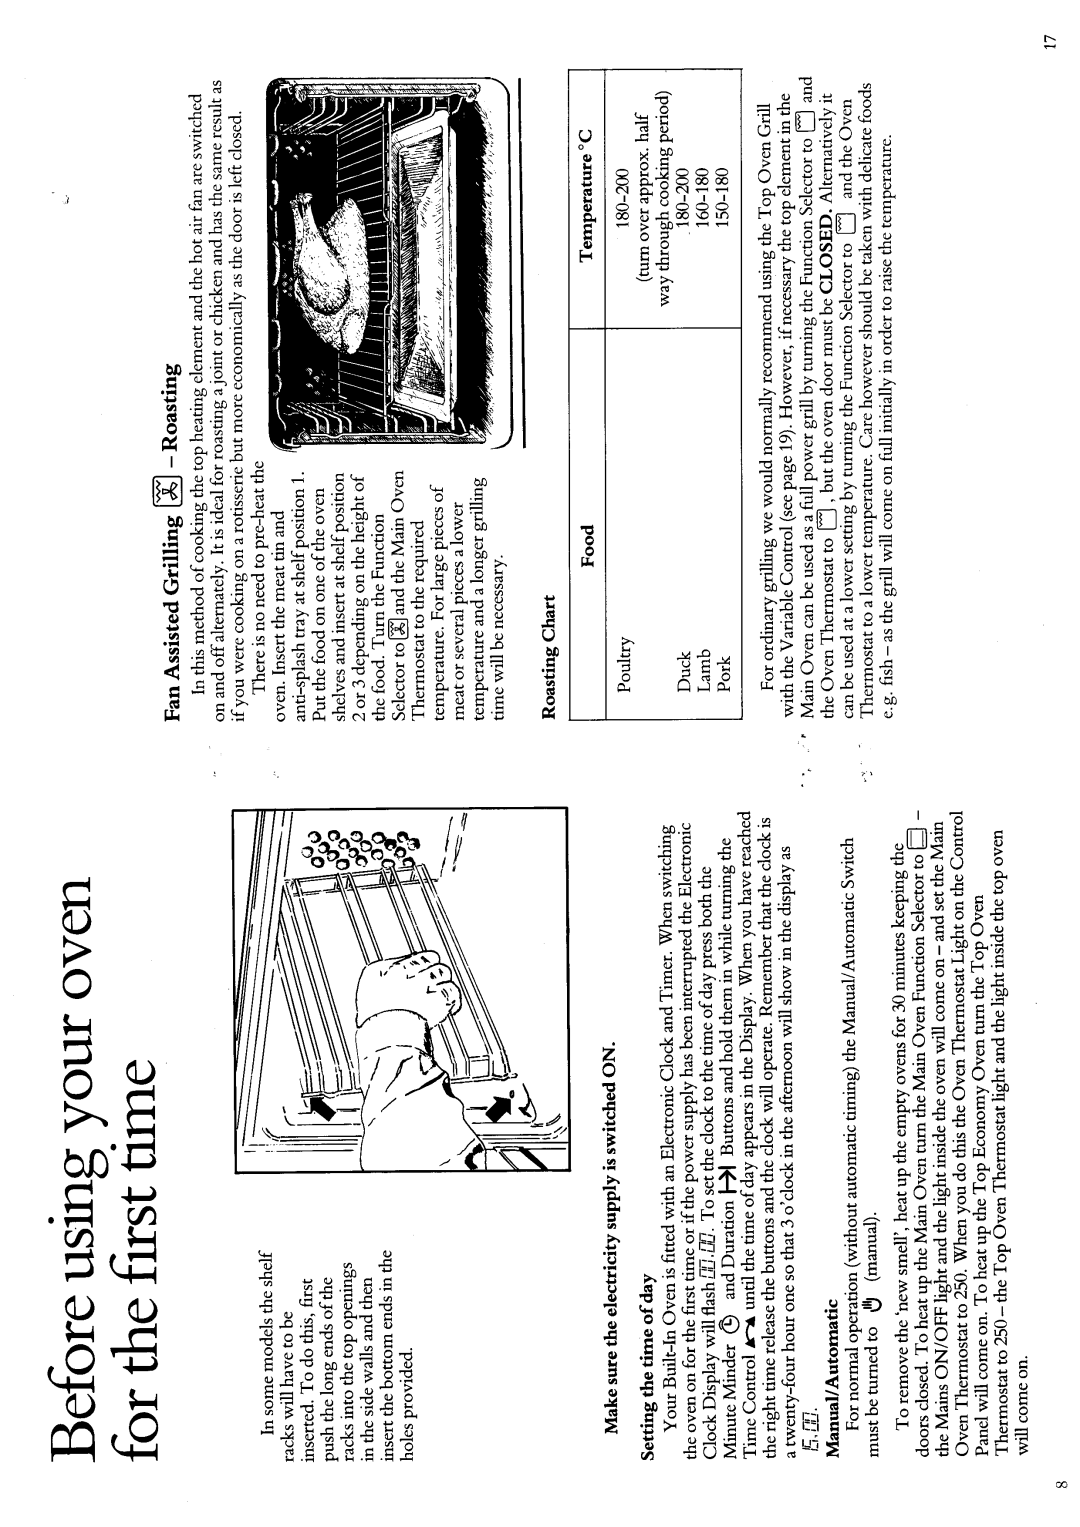 Hotpoint 6180 manual 